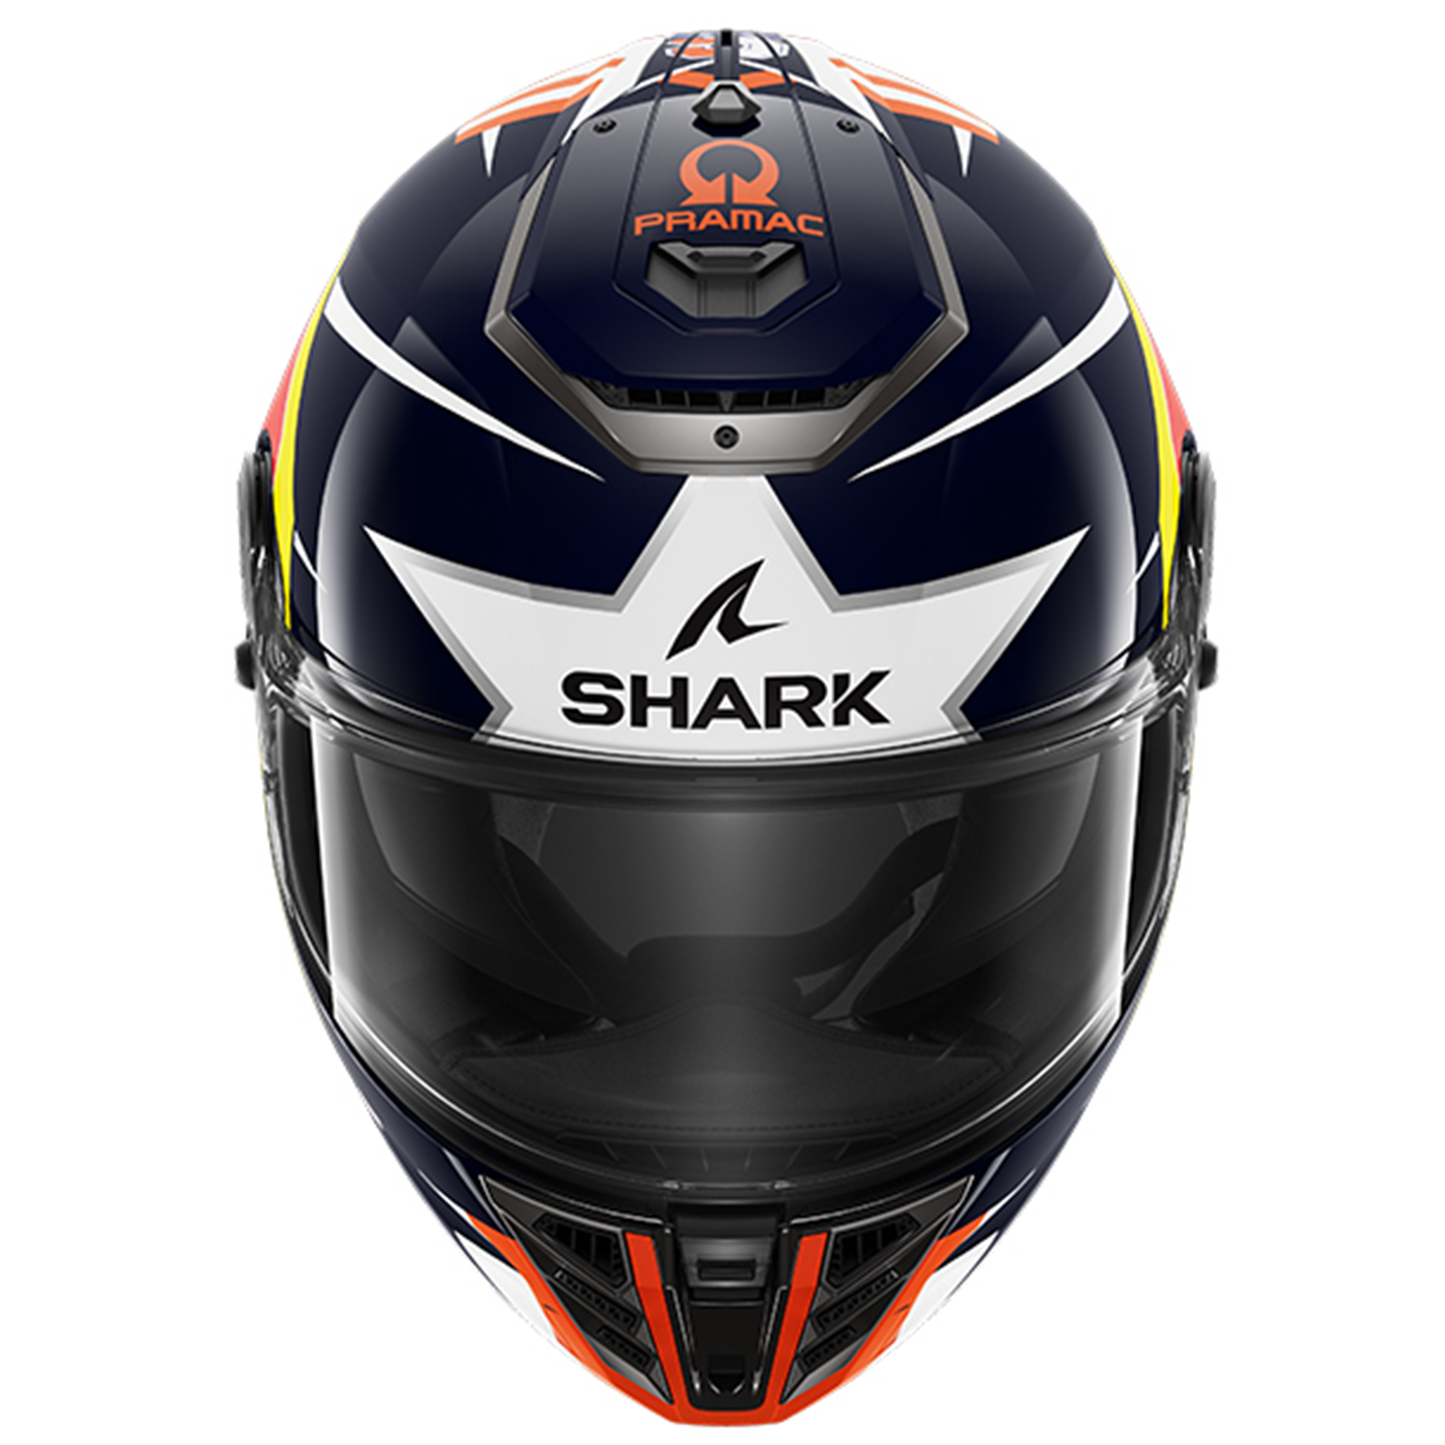 Shark Spartan RS - Replica Zarco BRW